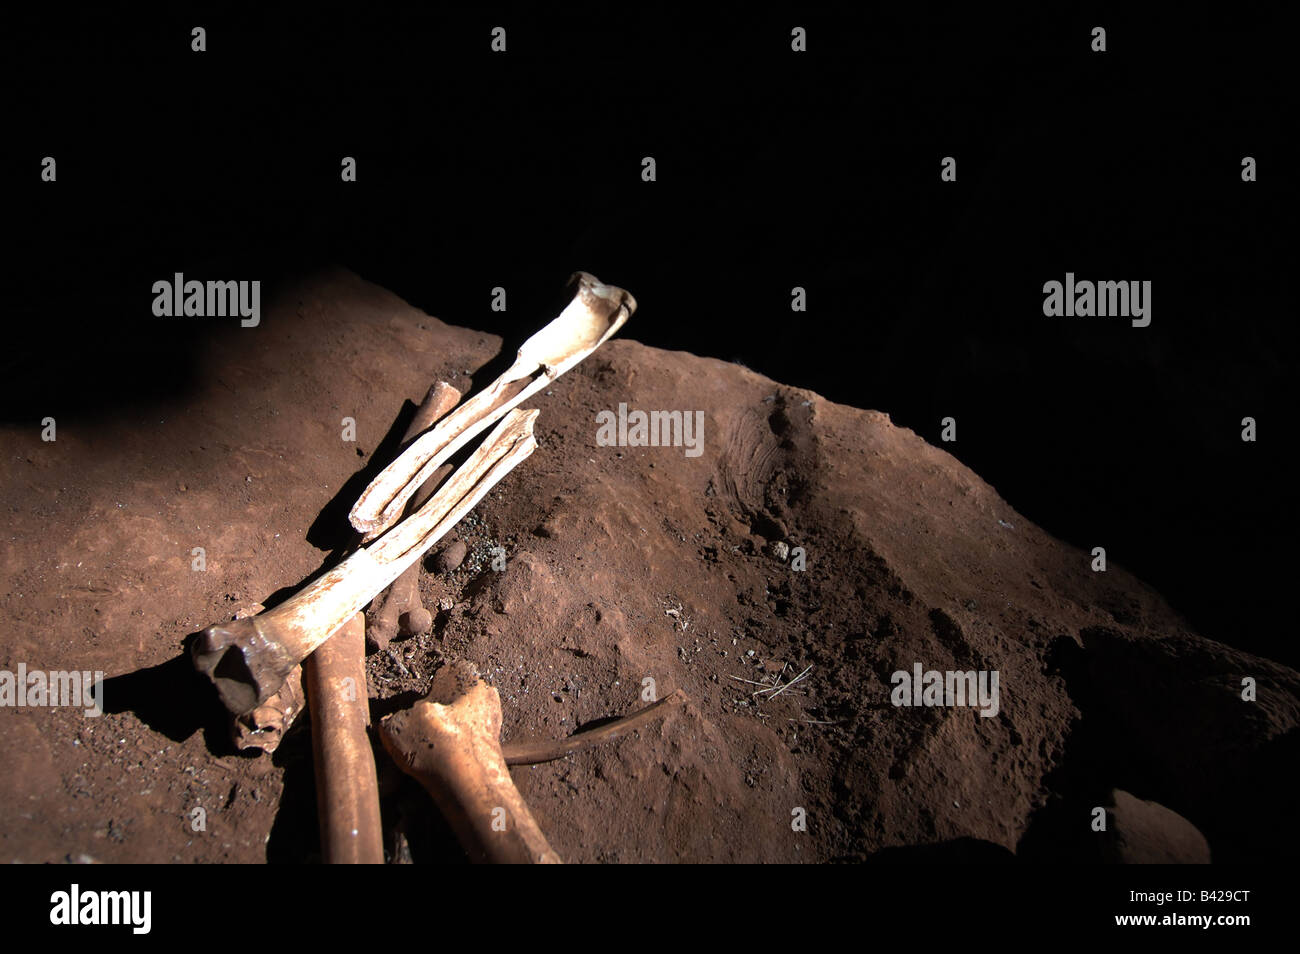 Kangaroo bones reveal evidence of ancient aboriginal cave occupation - longitudinally split to access marrow inside Stock Photo